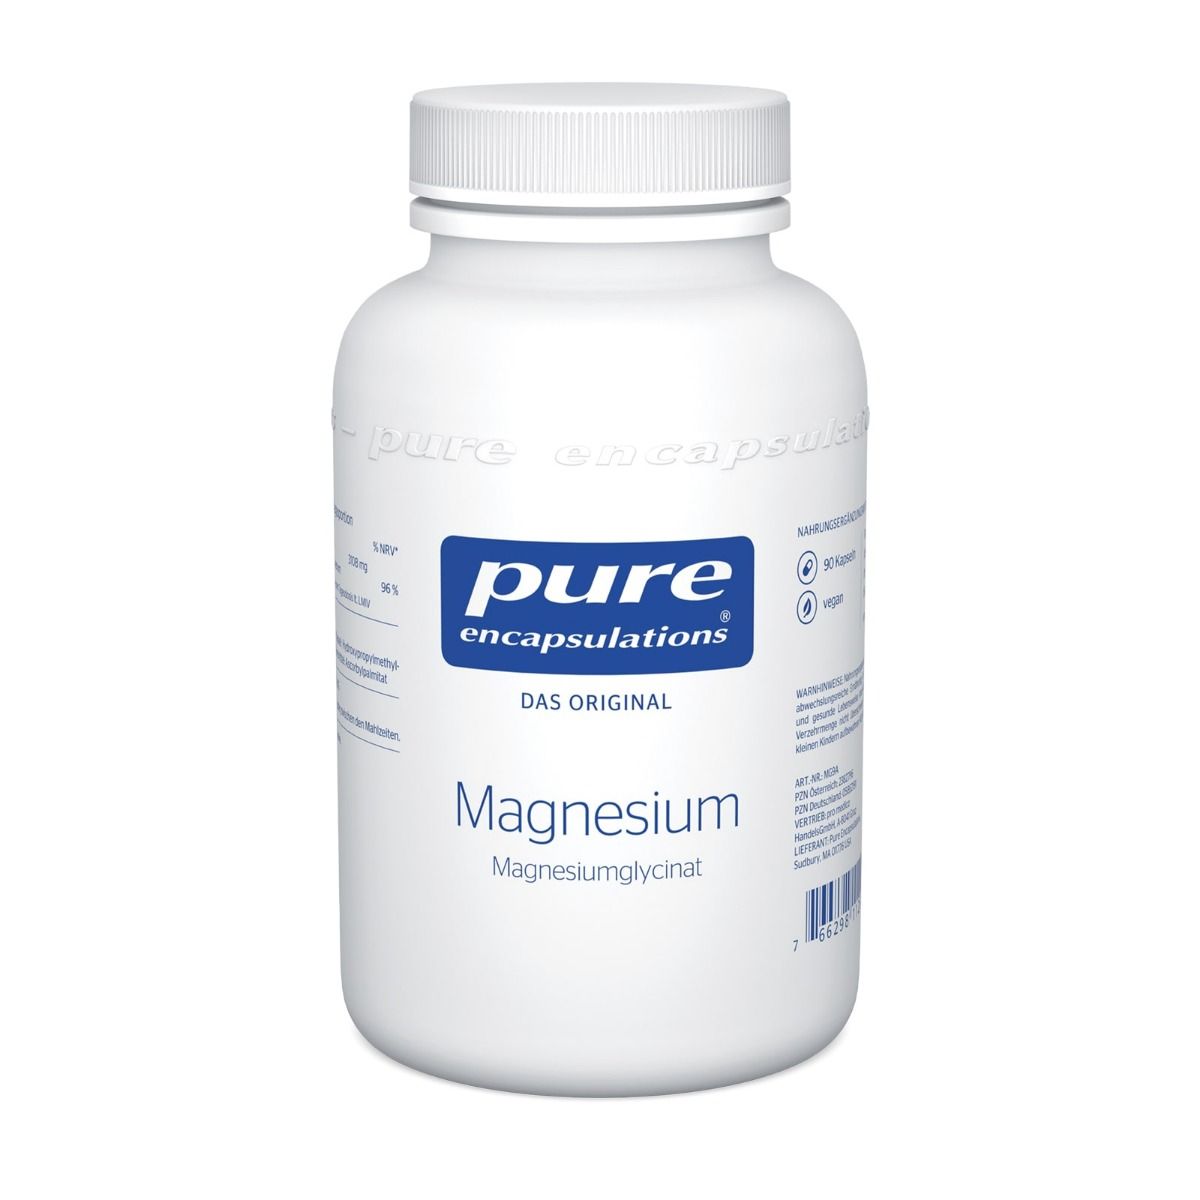 Pure Encapsulations MAGNESIUM GLYCINAT ( Magnesiumglycinat ) Kapseln 90Stück